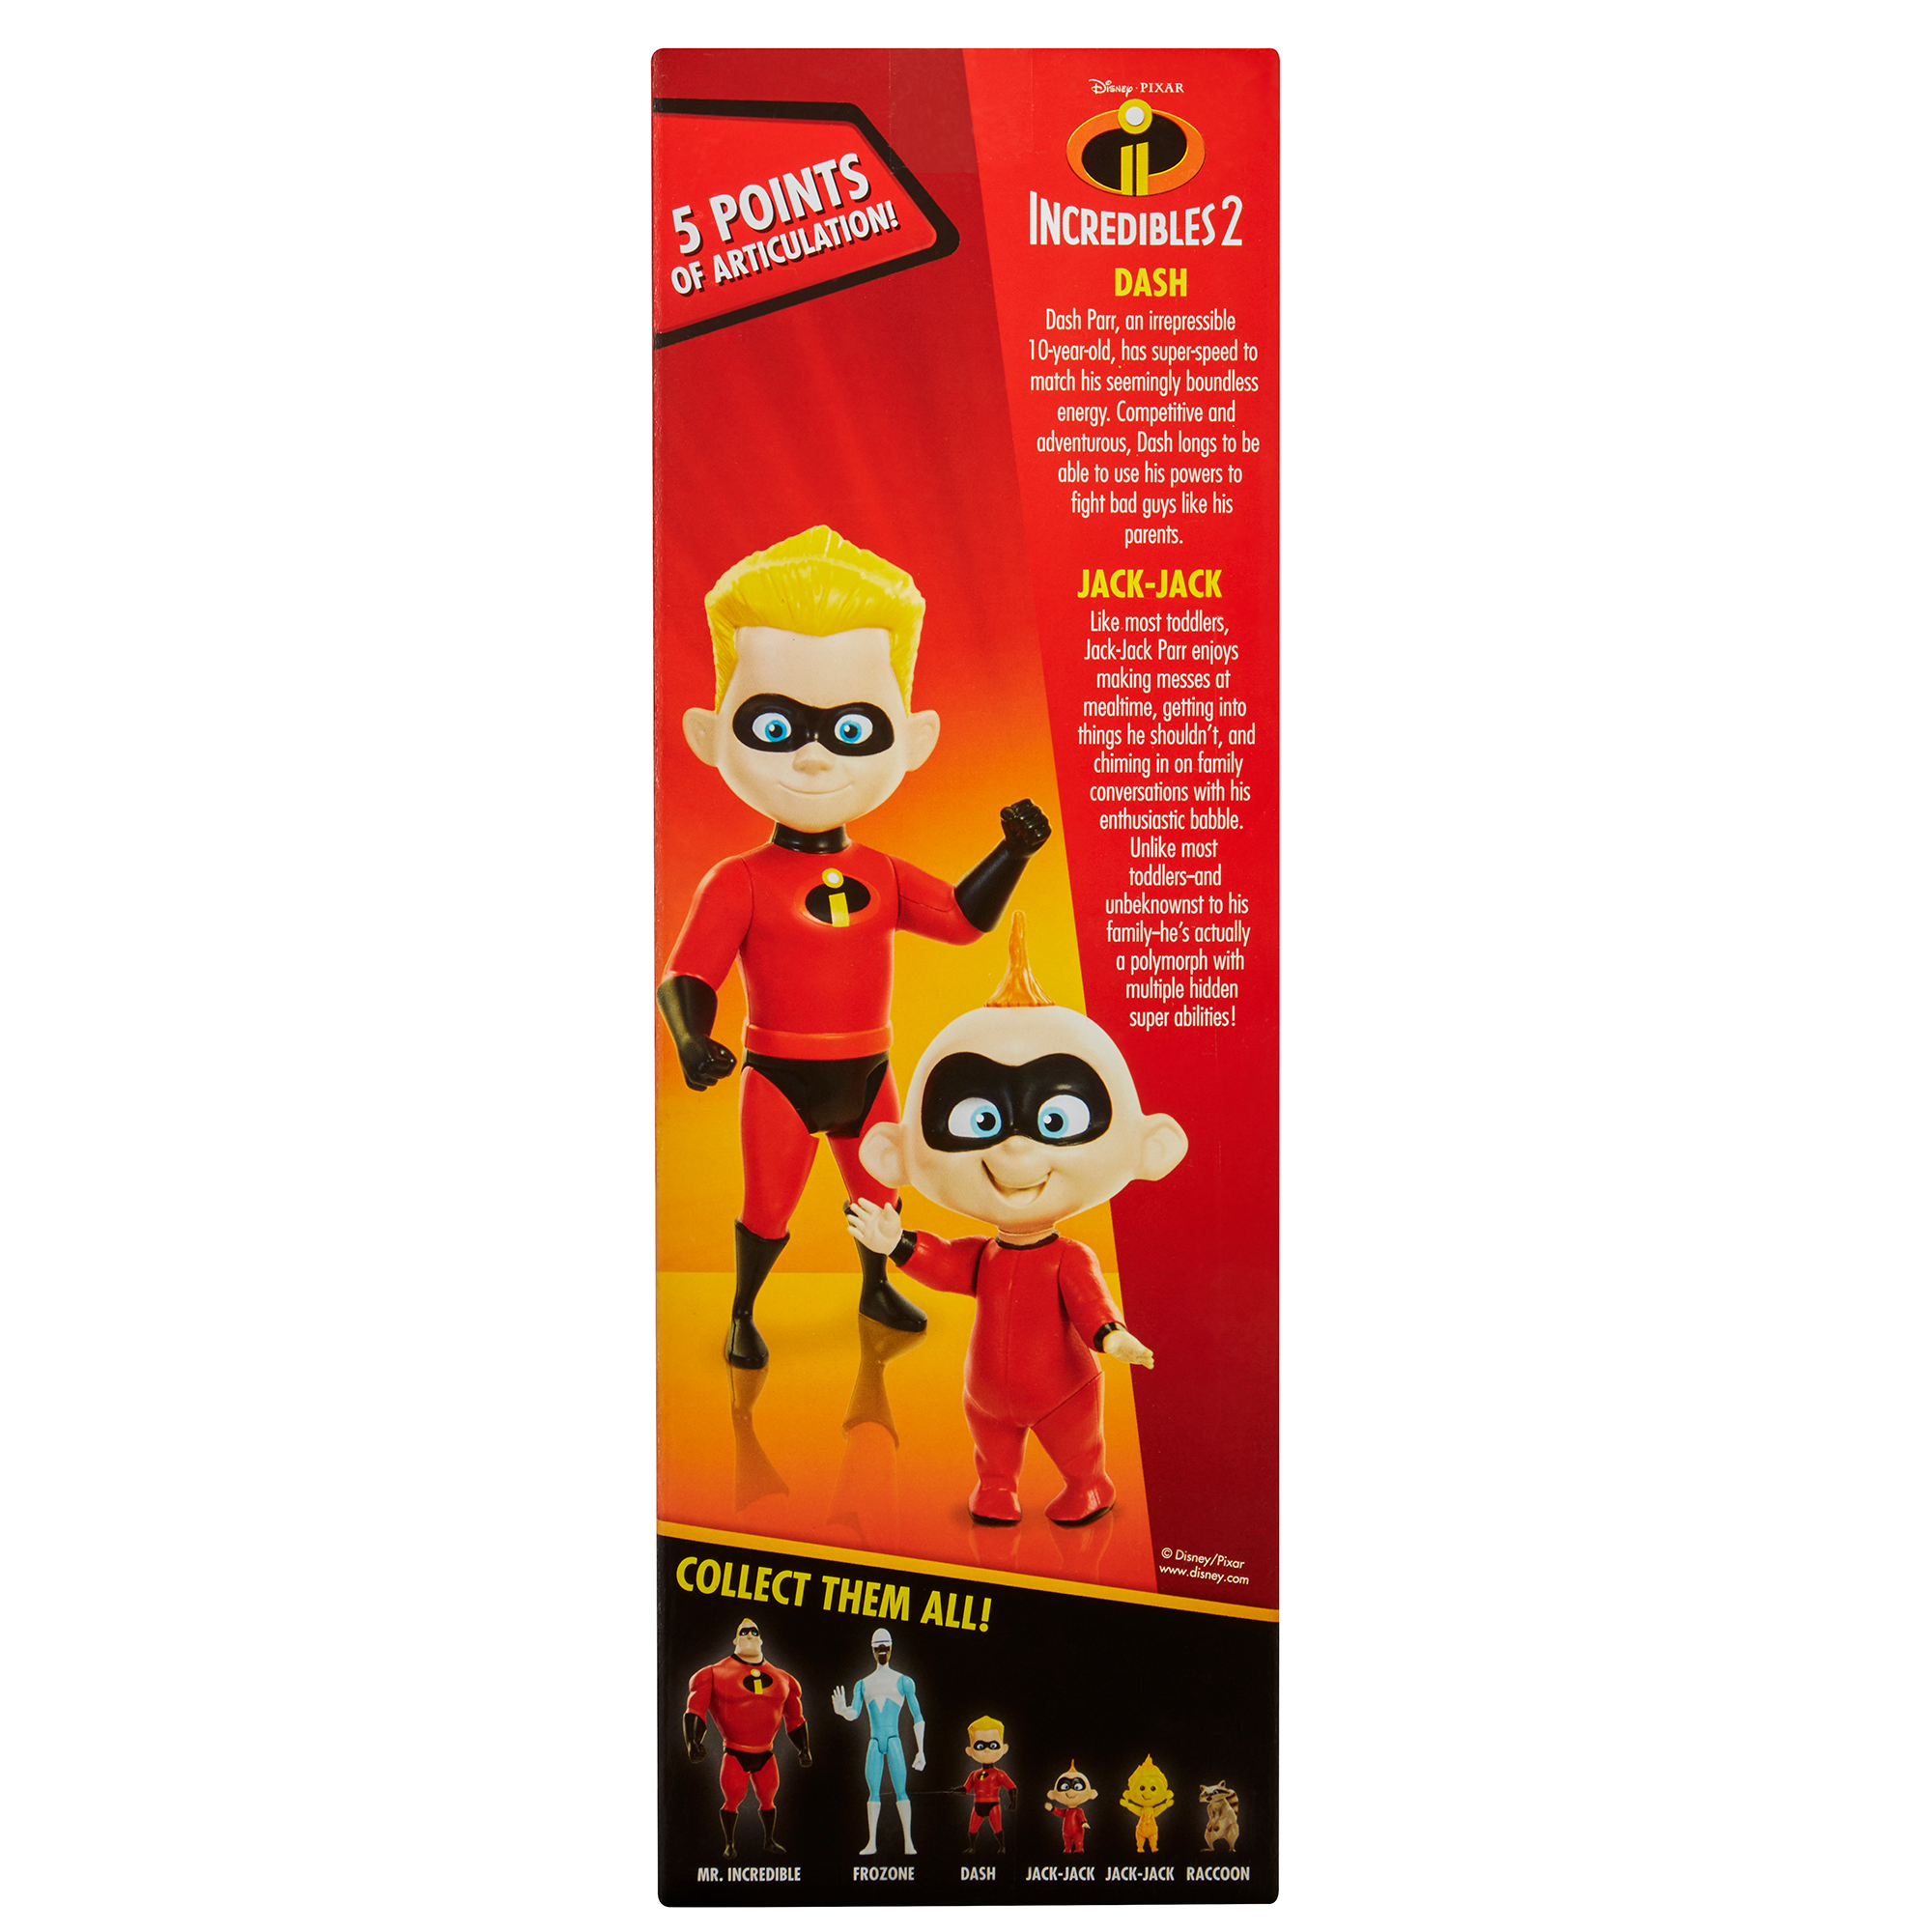 Incredibles 2 champion series action figures - dash & jack-jack - image 2 of 6